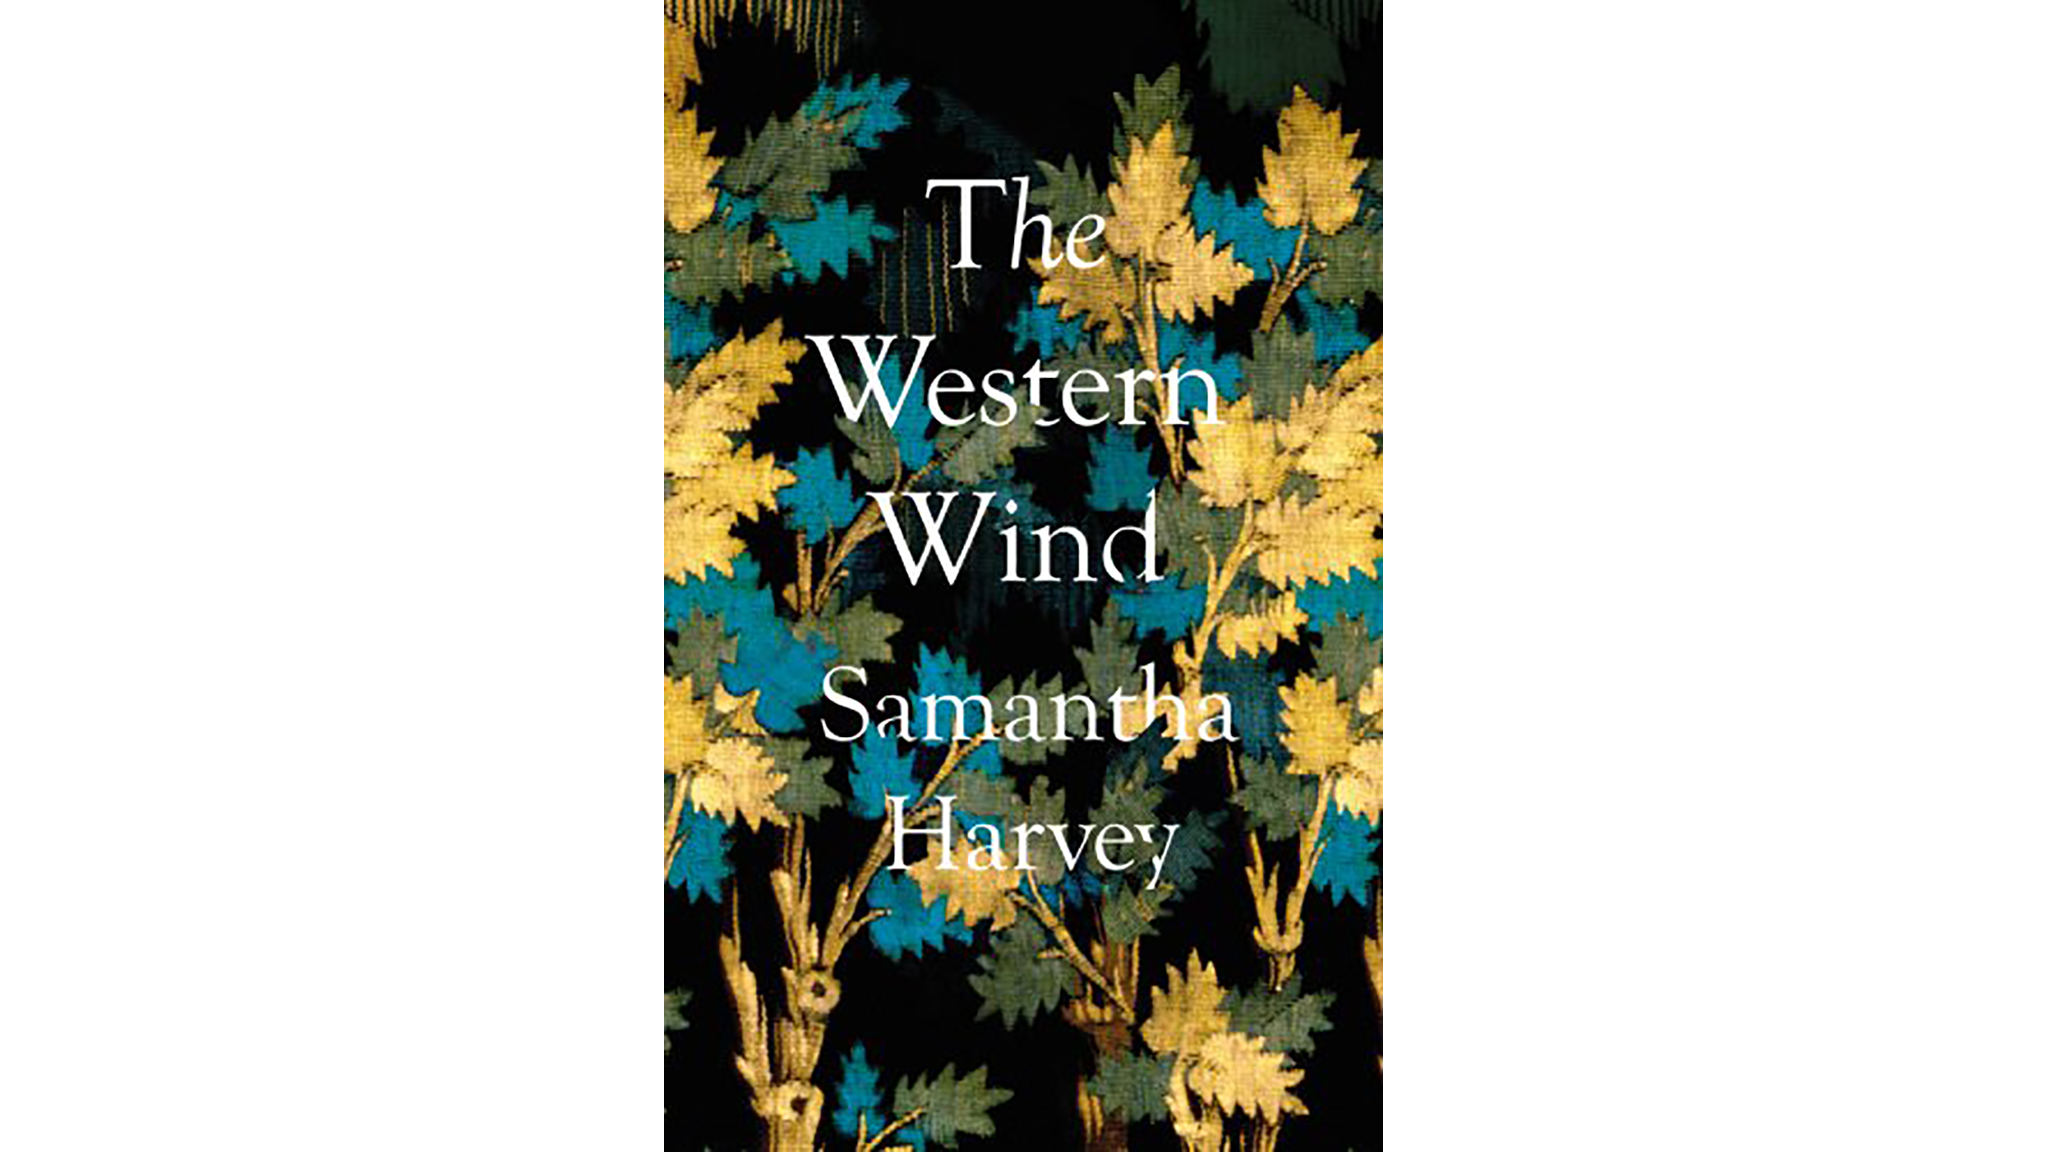 The Western Wind Samantha Harvey